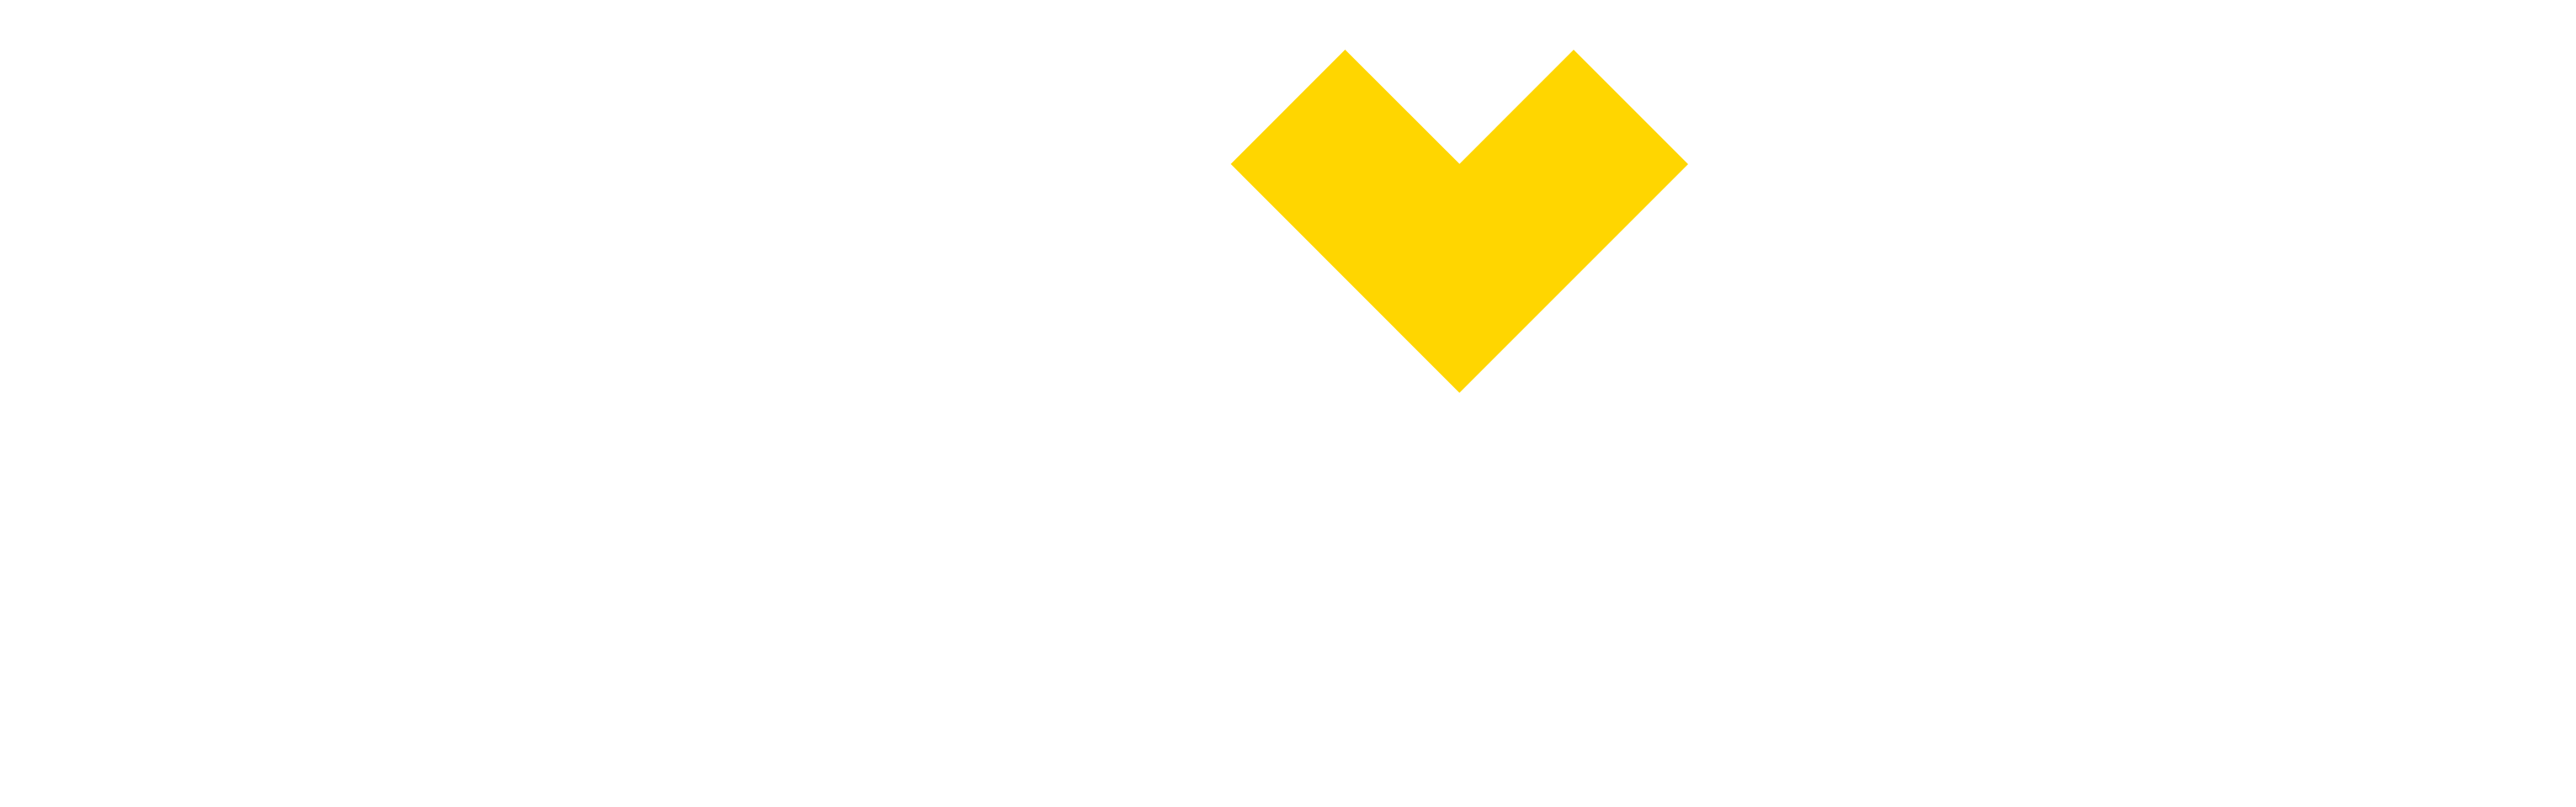 Addison Fasteners Logo